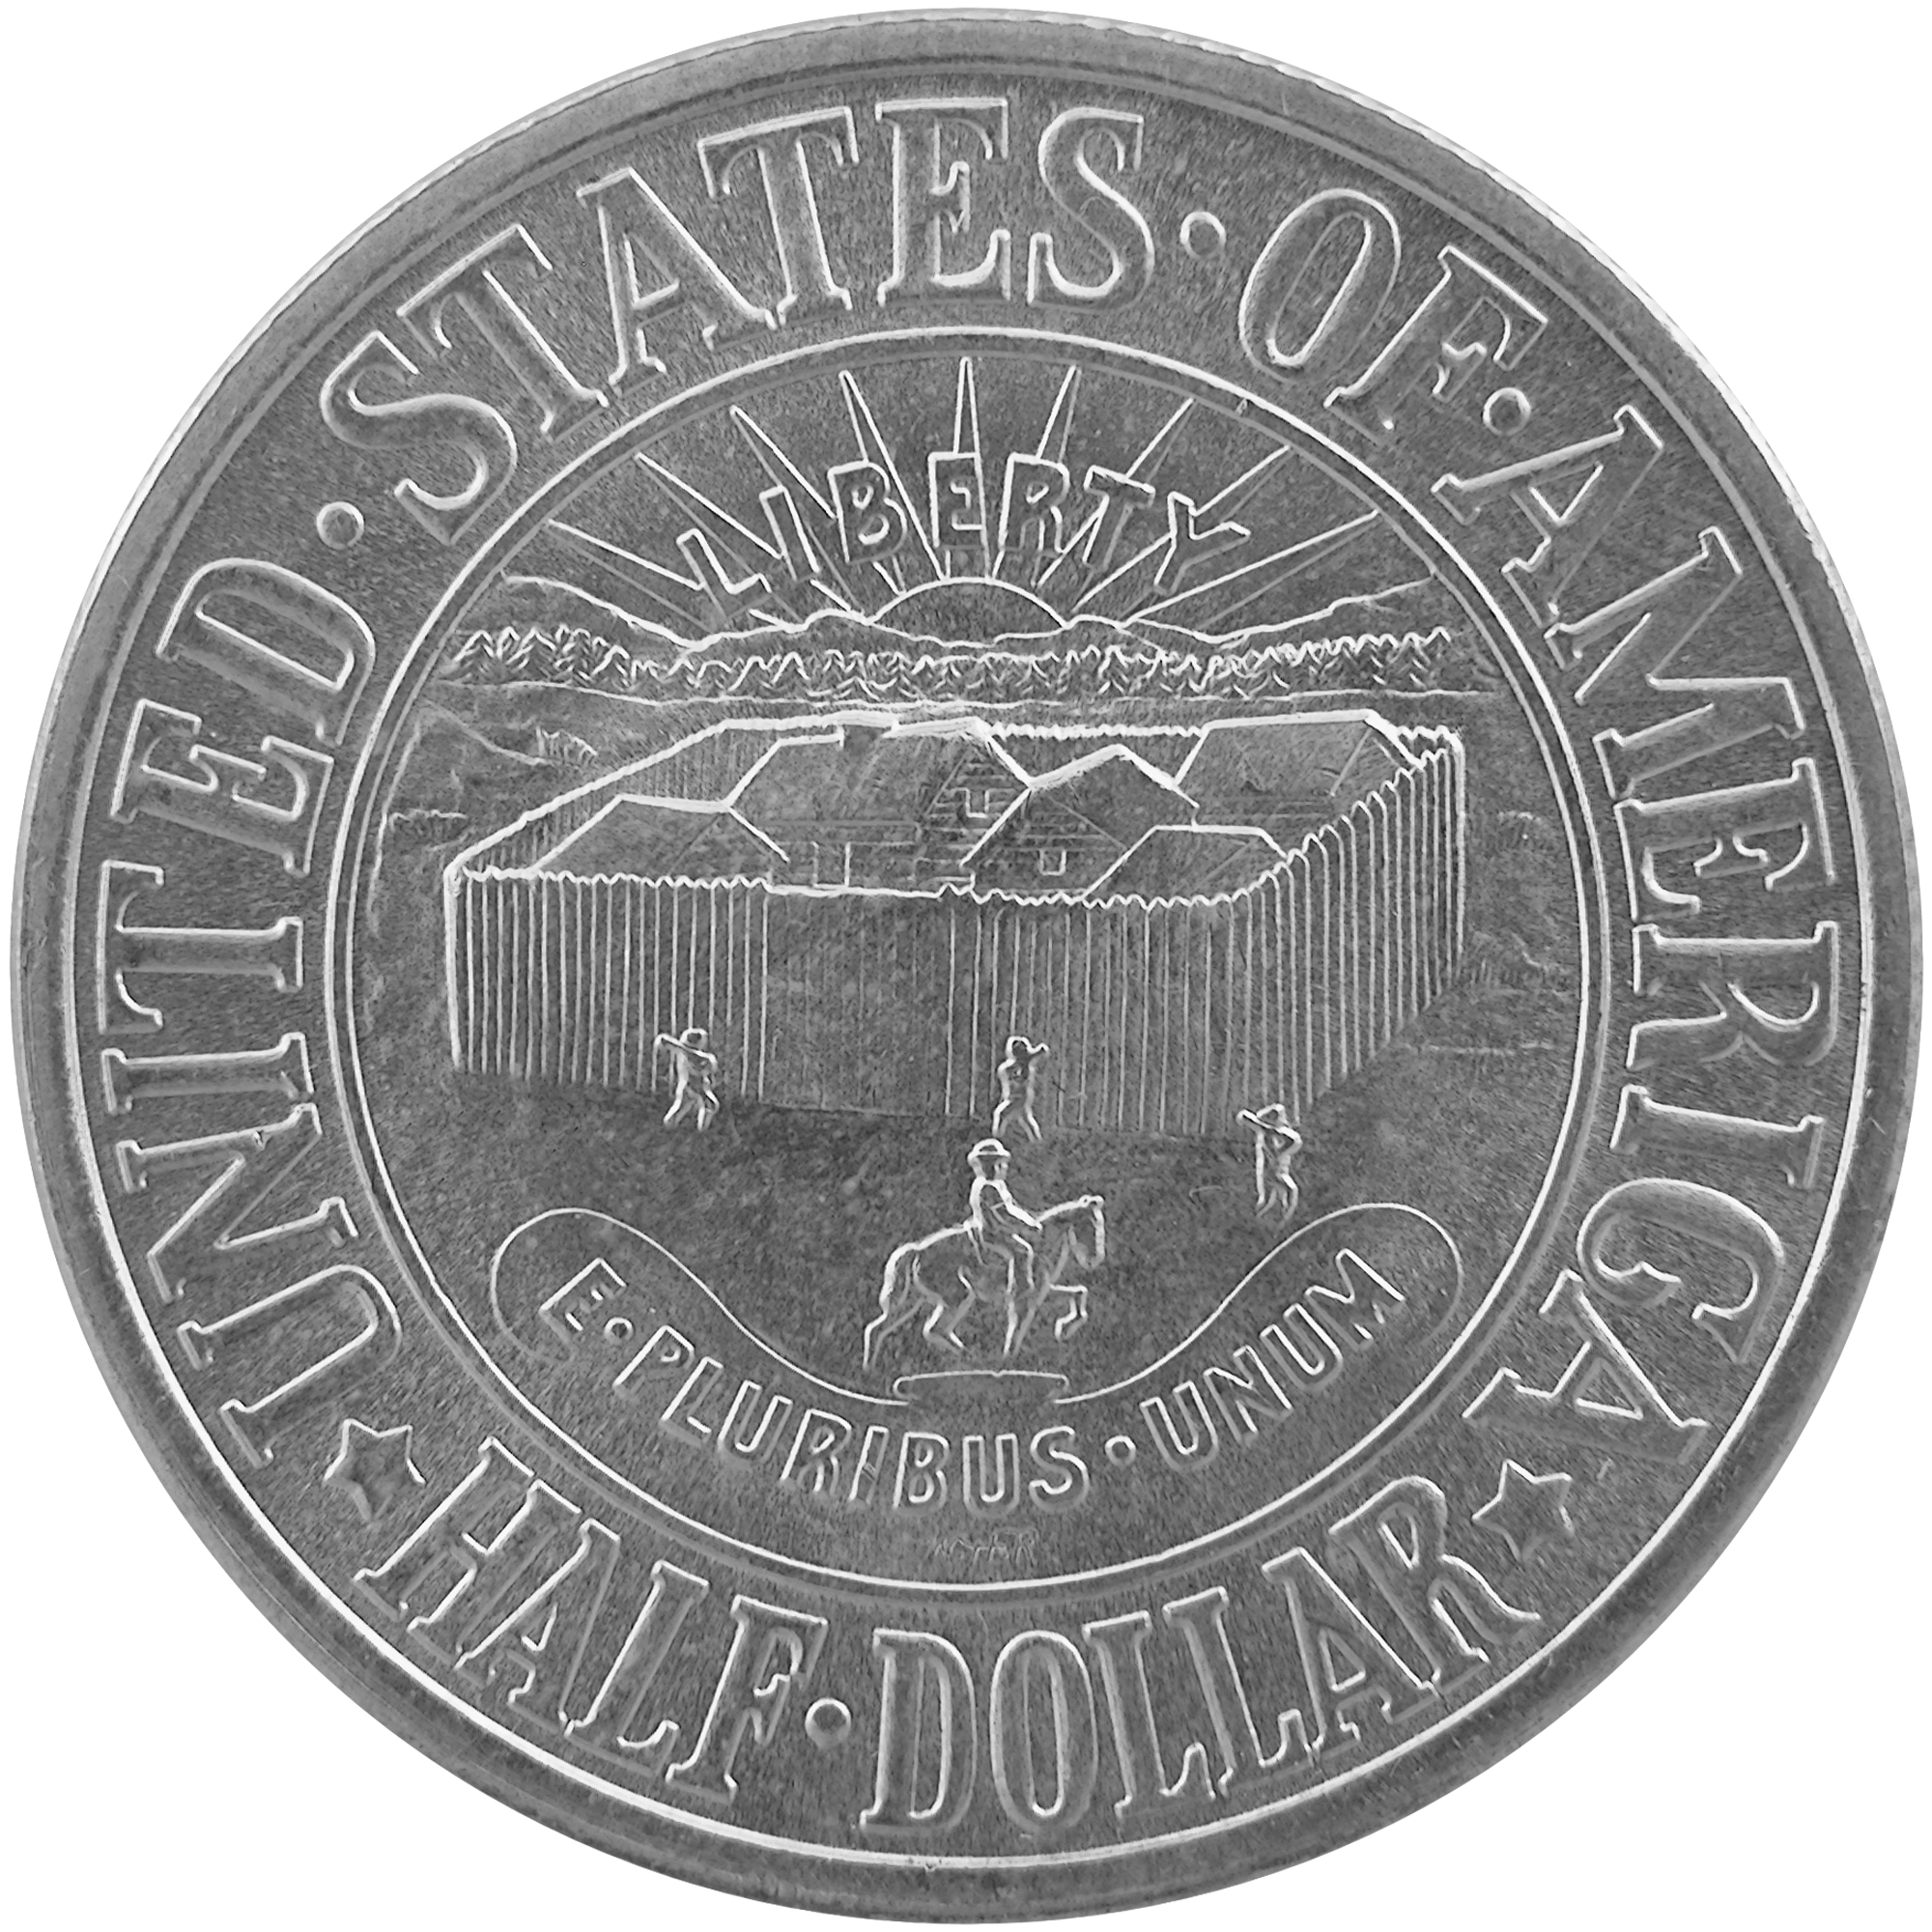 1936 York County Maine Tercentenary Commemorative Silver Half Dollar Coin Obverse